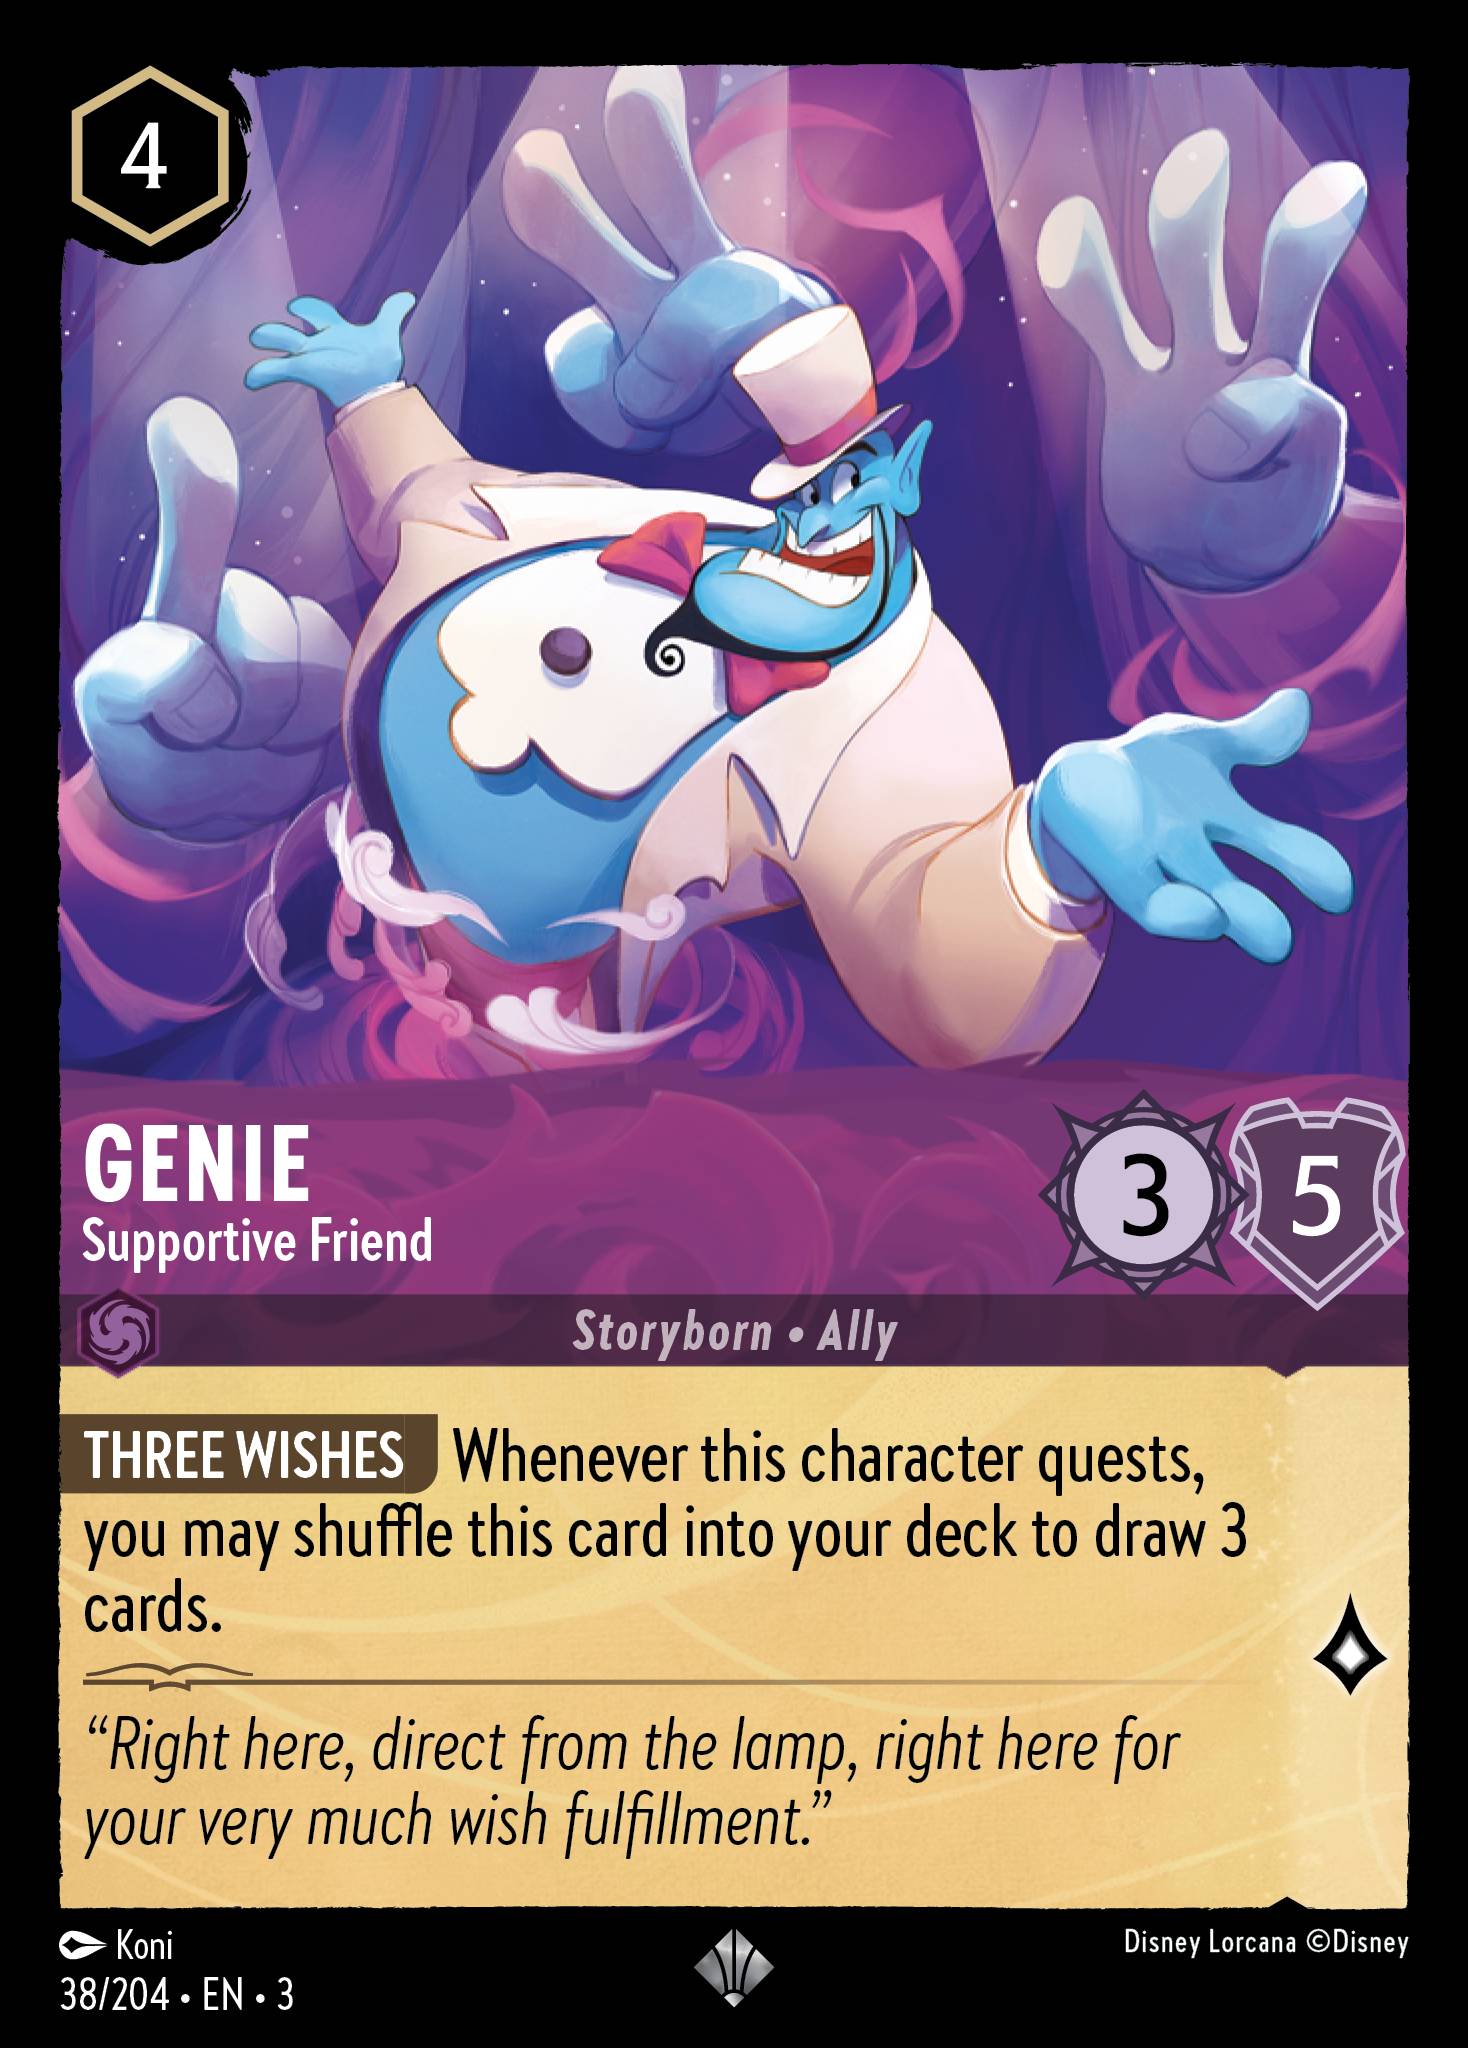 Genie - Supportive Friend